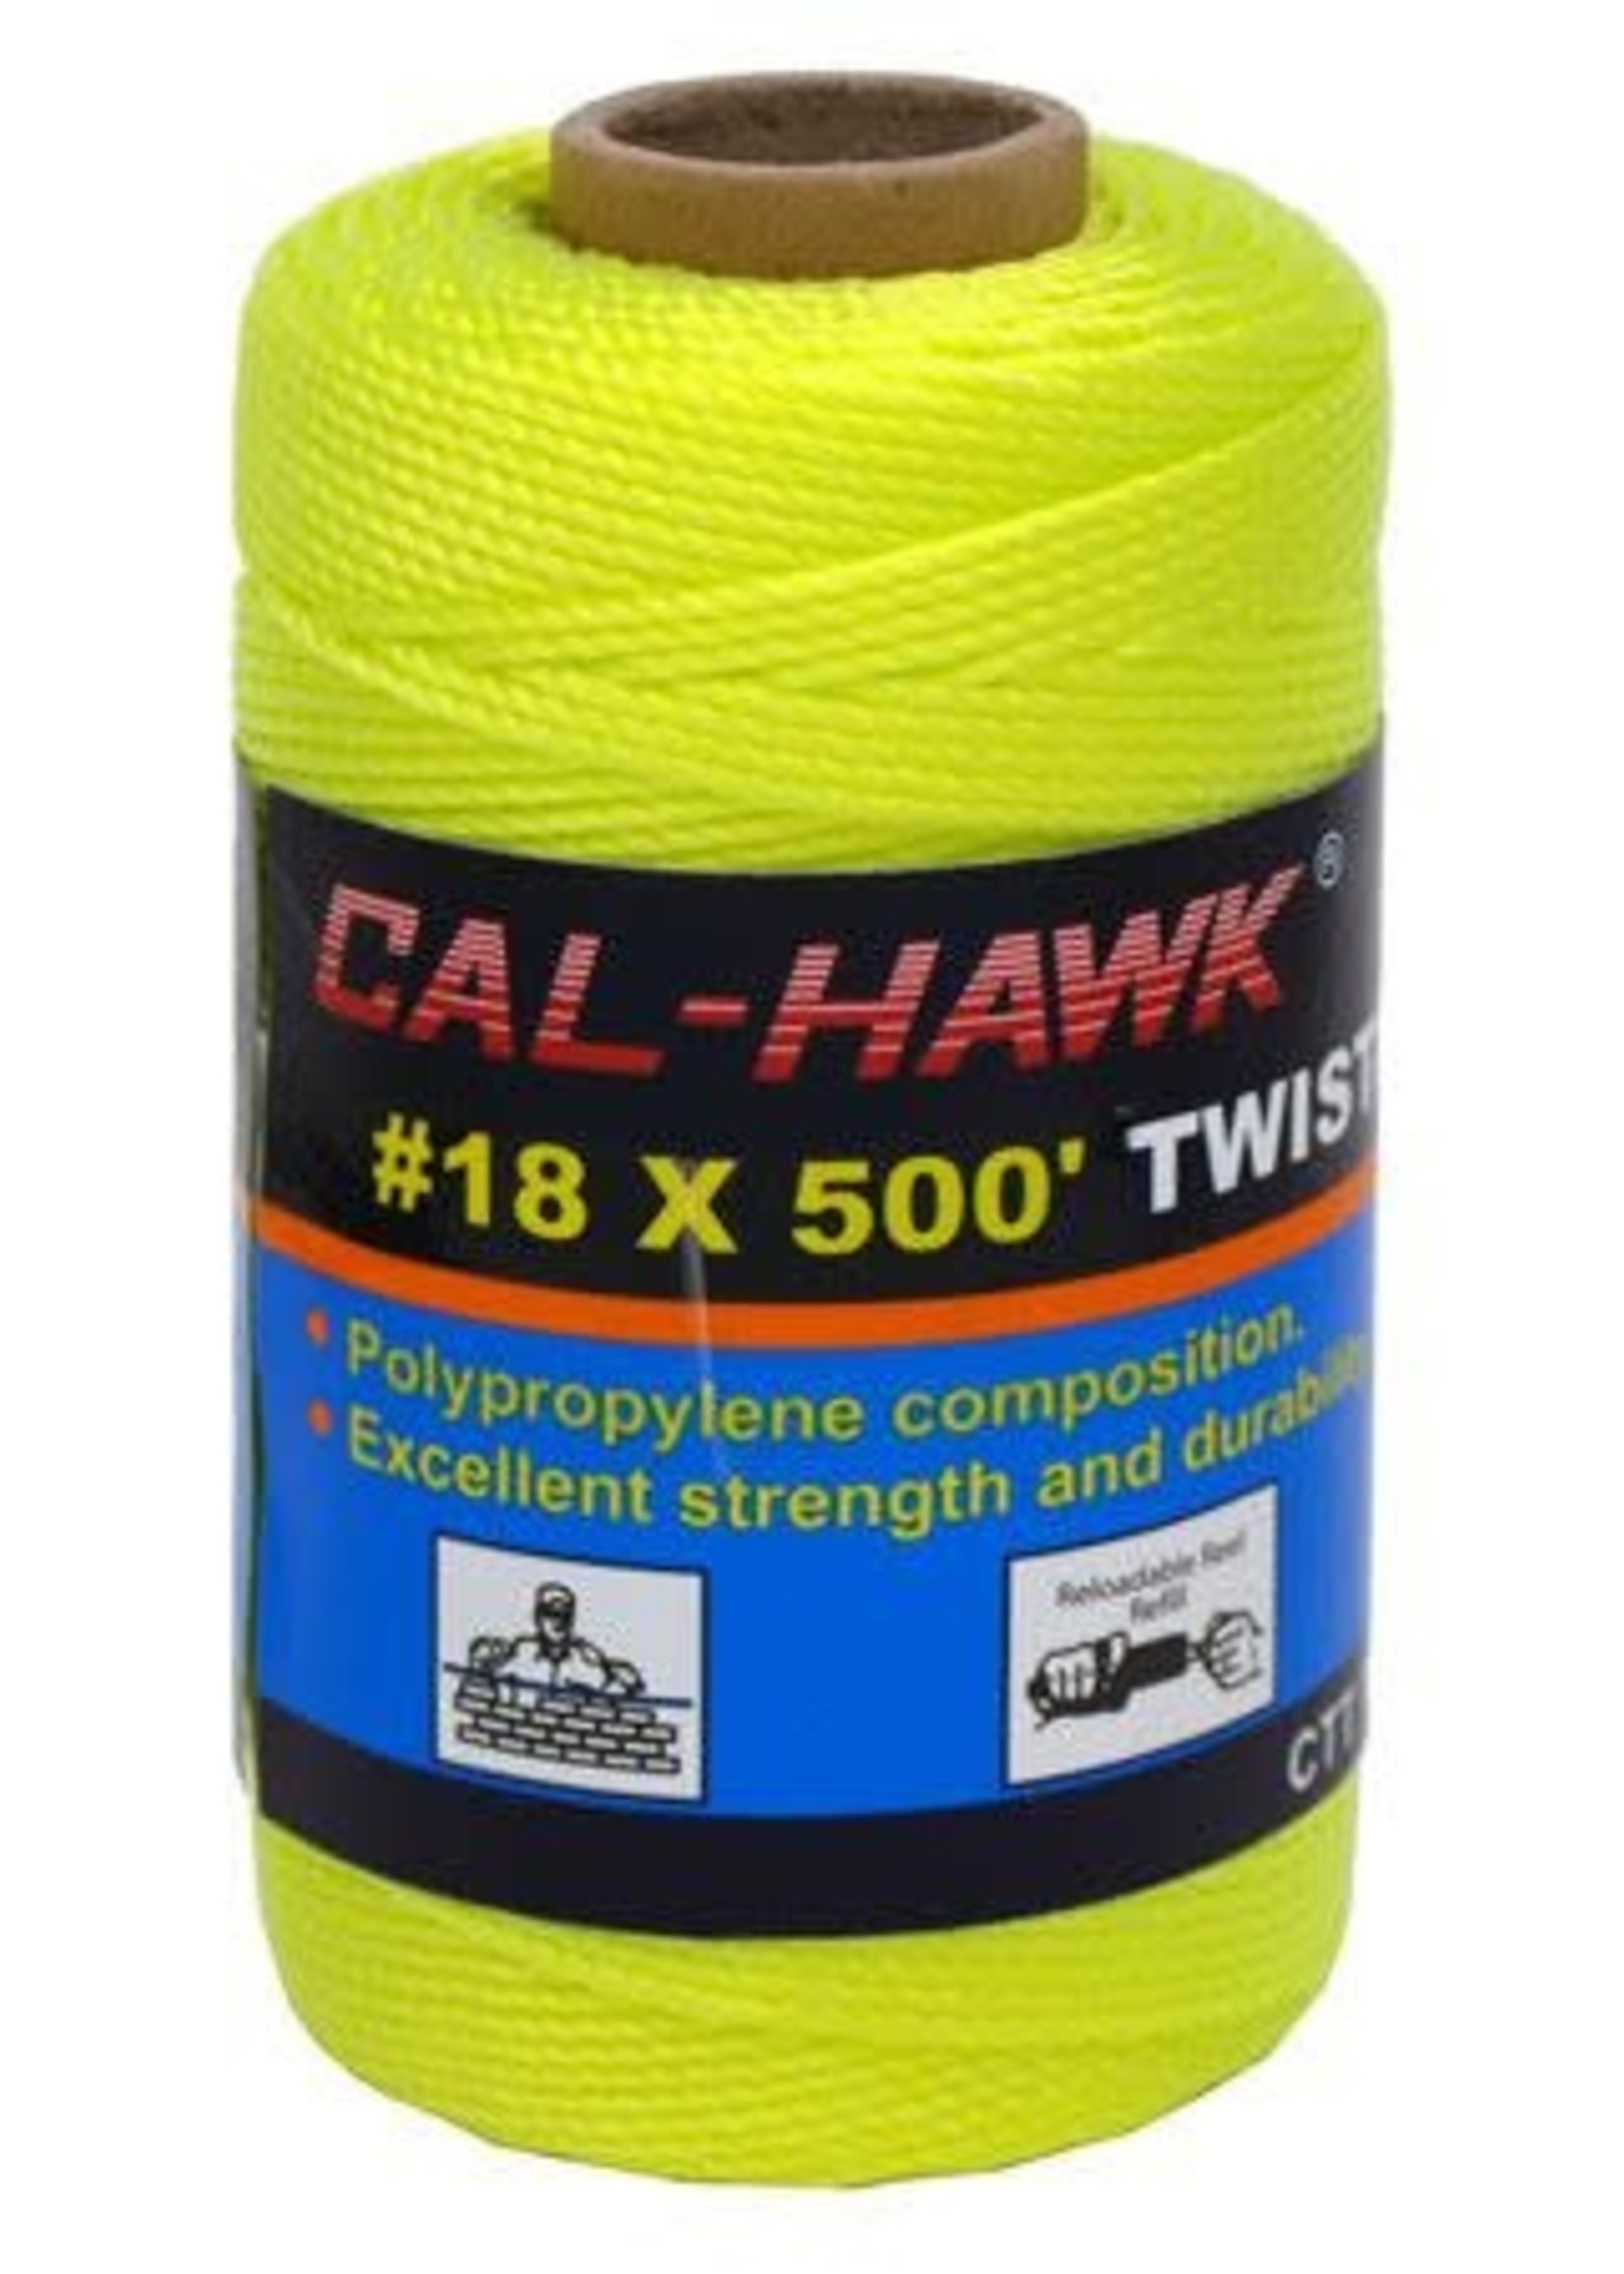 Cal Hawk Mason Line 500 Feet - Yellow